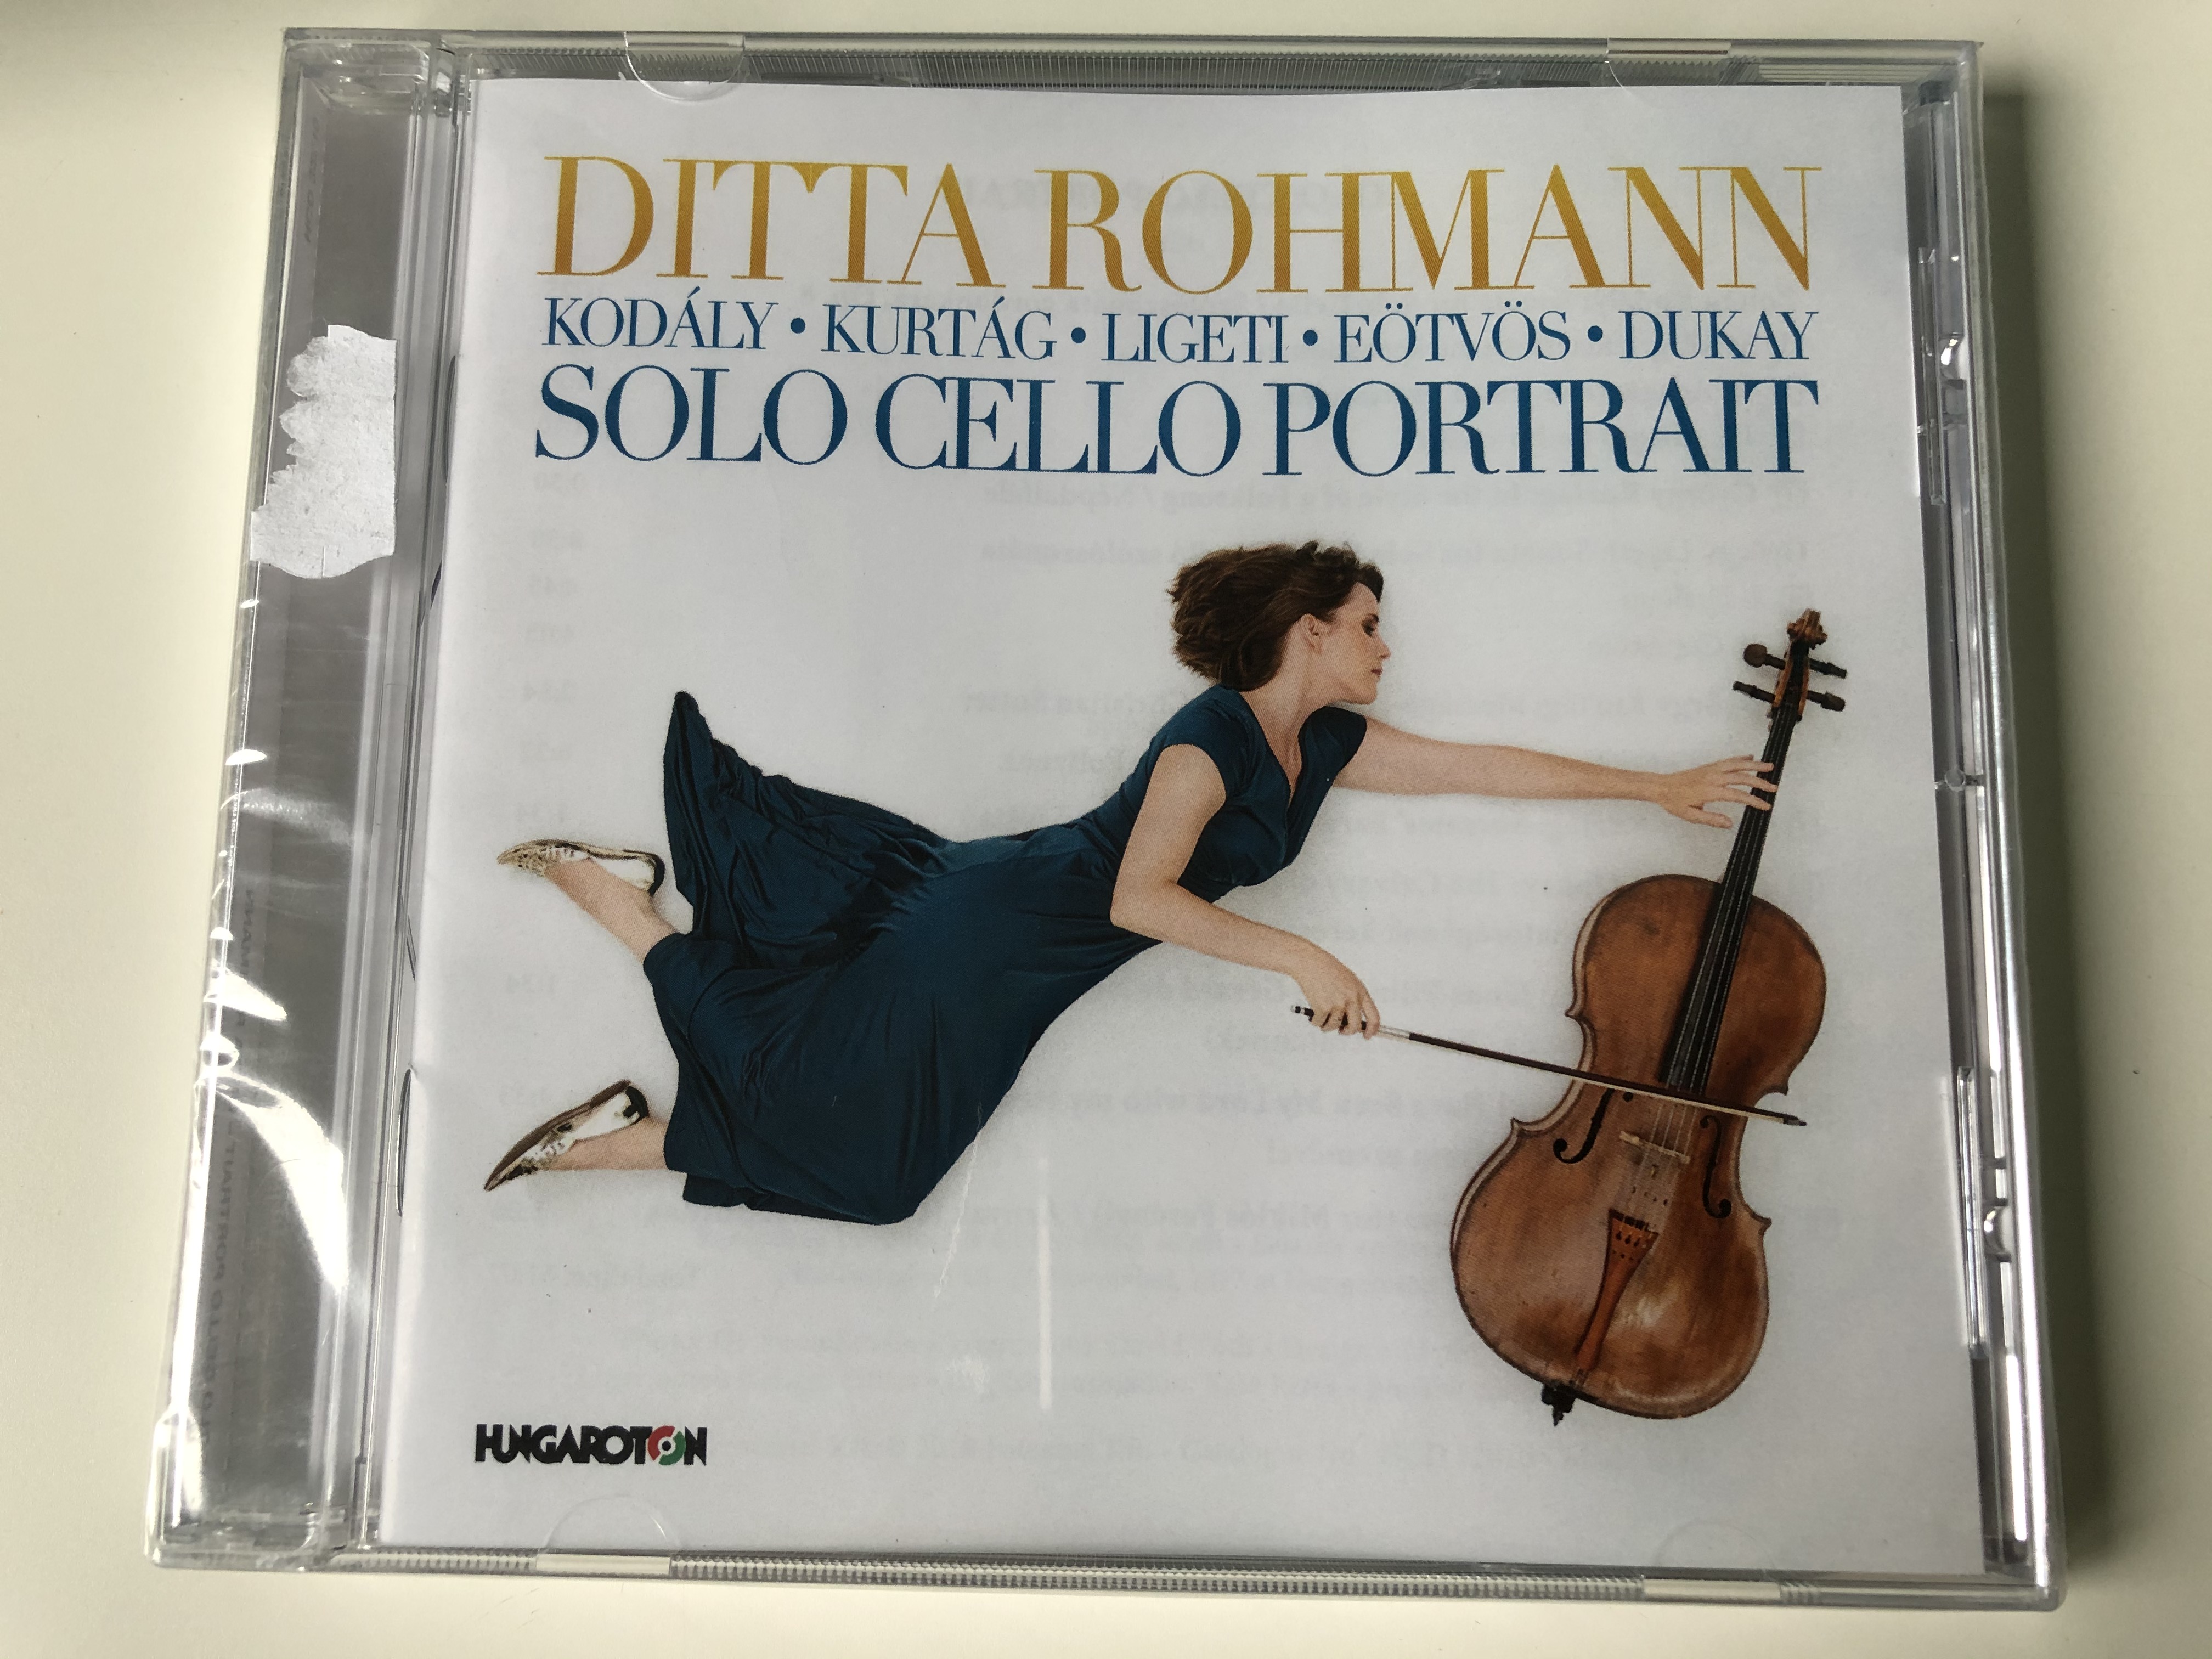 ditta-rohmann-solo-cello-portrait-kodaly-kurtag-ligeti-eotvos-dukay-hungaroton-audio-cd-2018-hcd-32810-1-.jpg